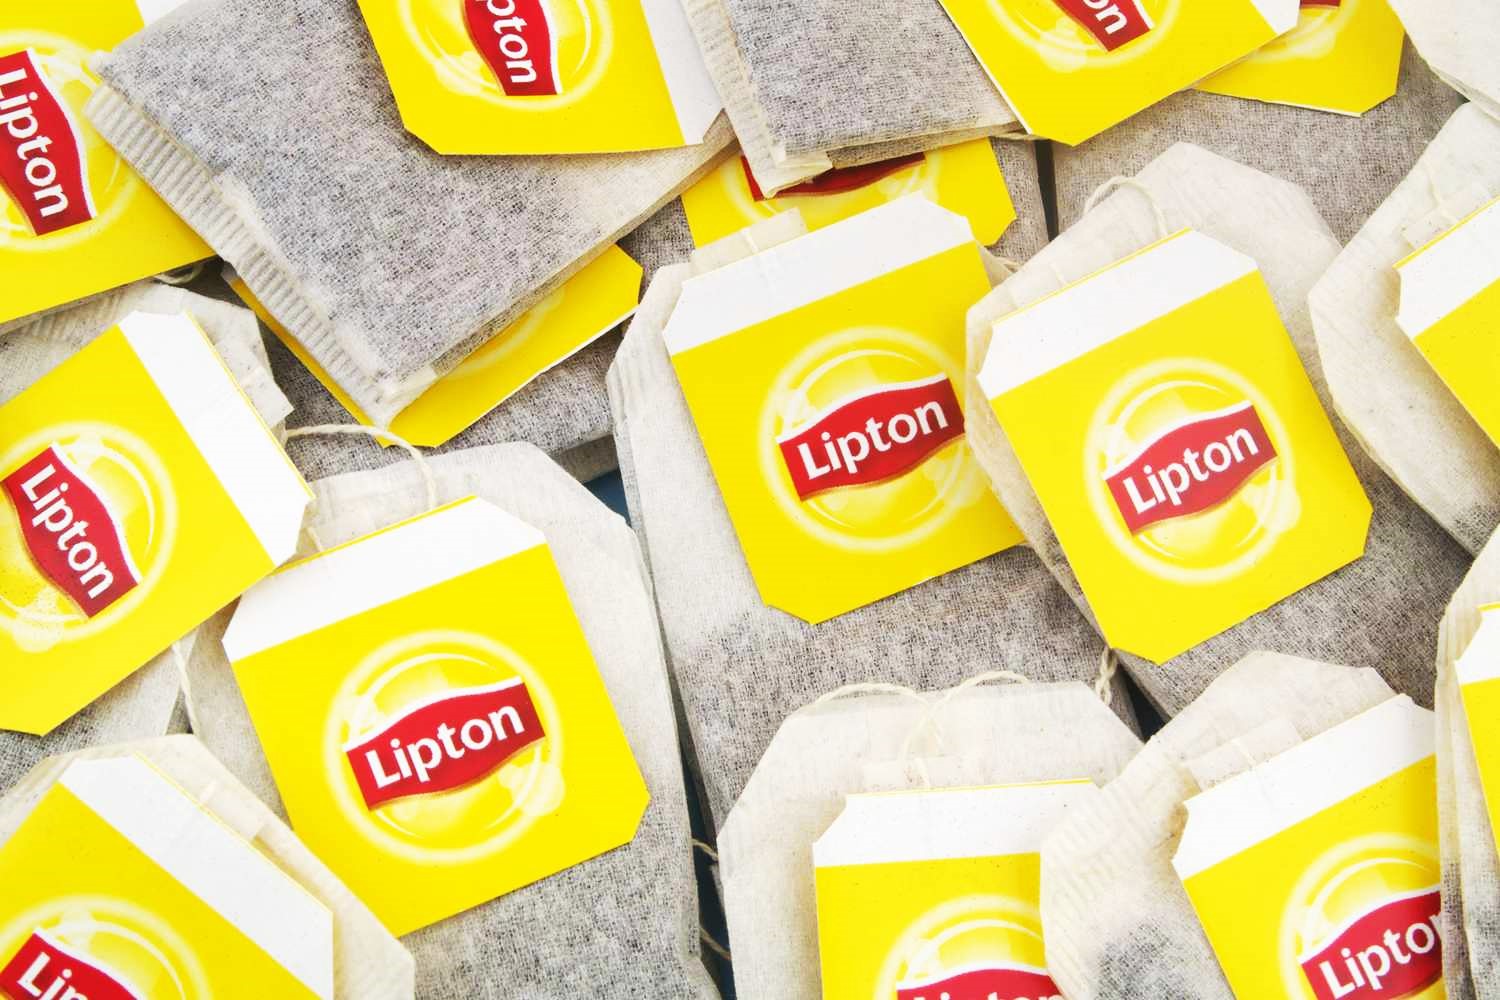 18-lipton-tea-bags-nutrition-facts